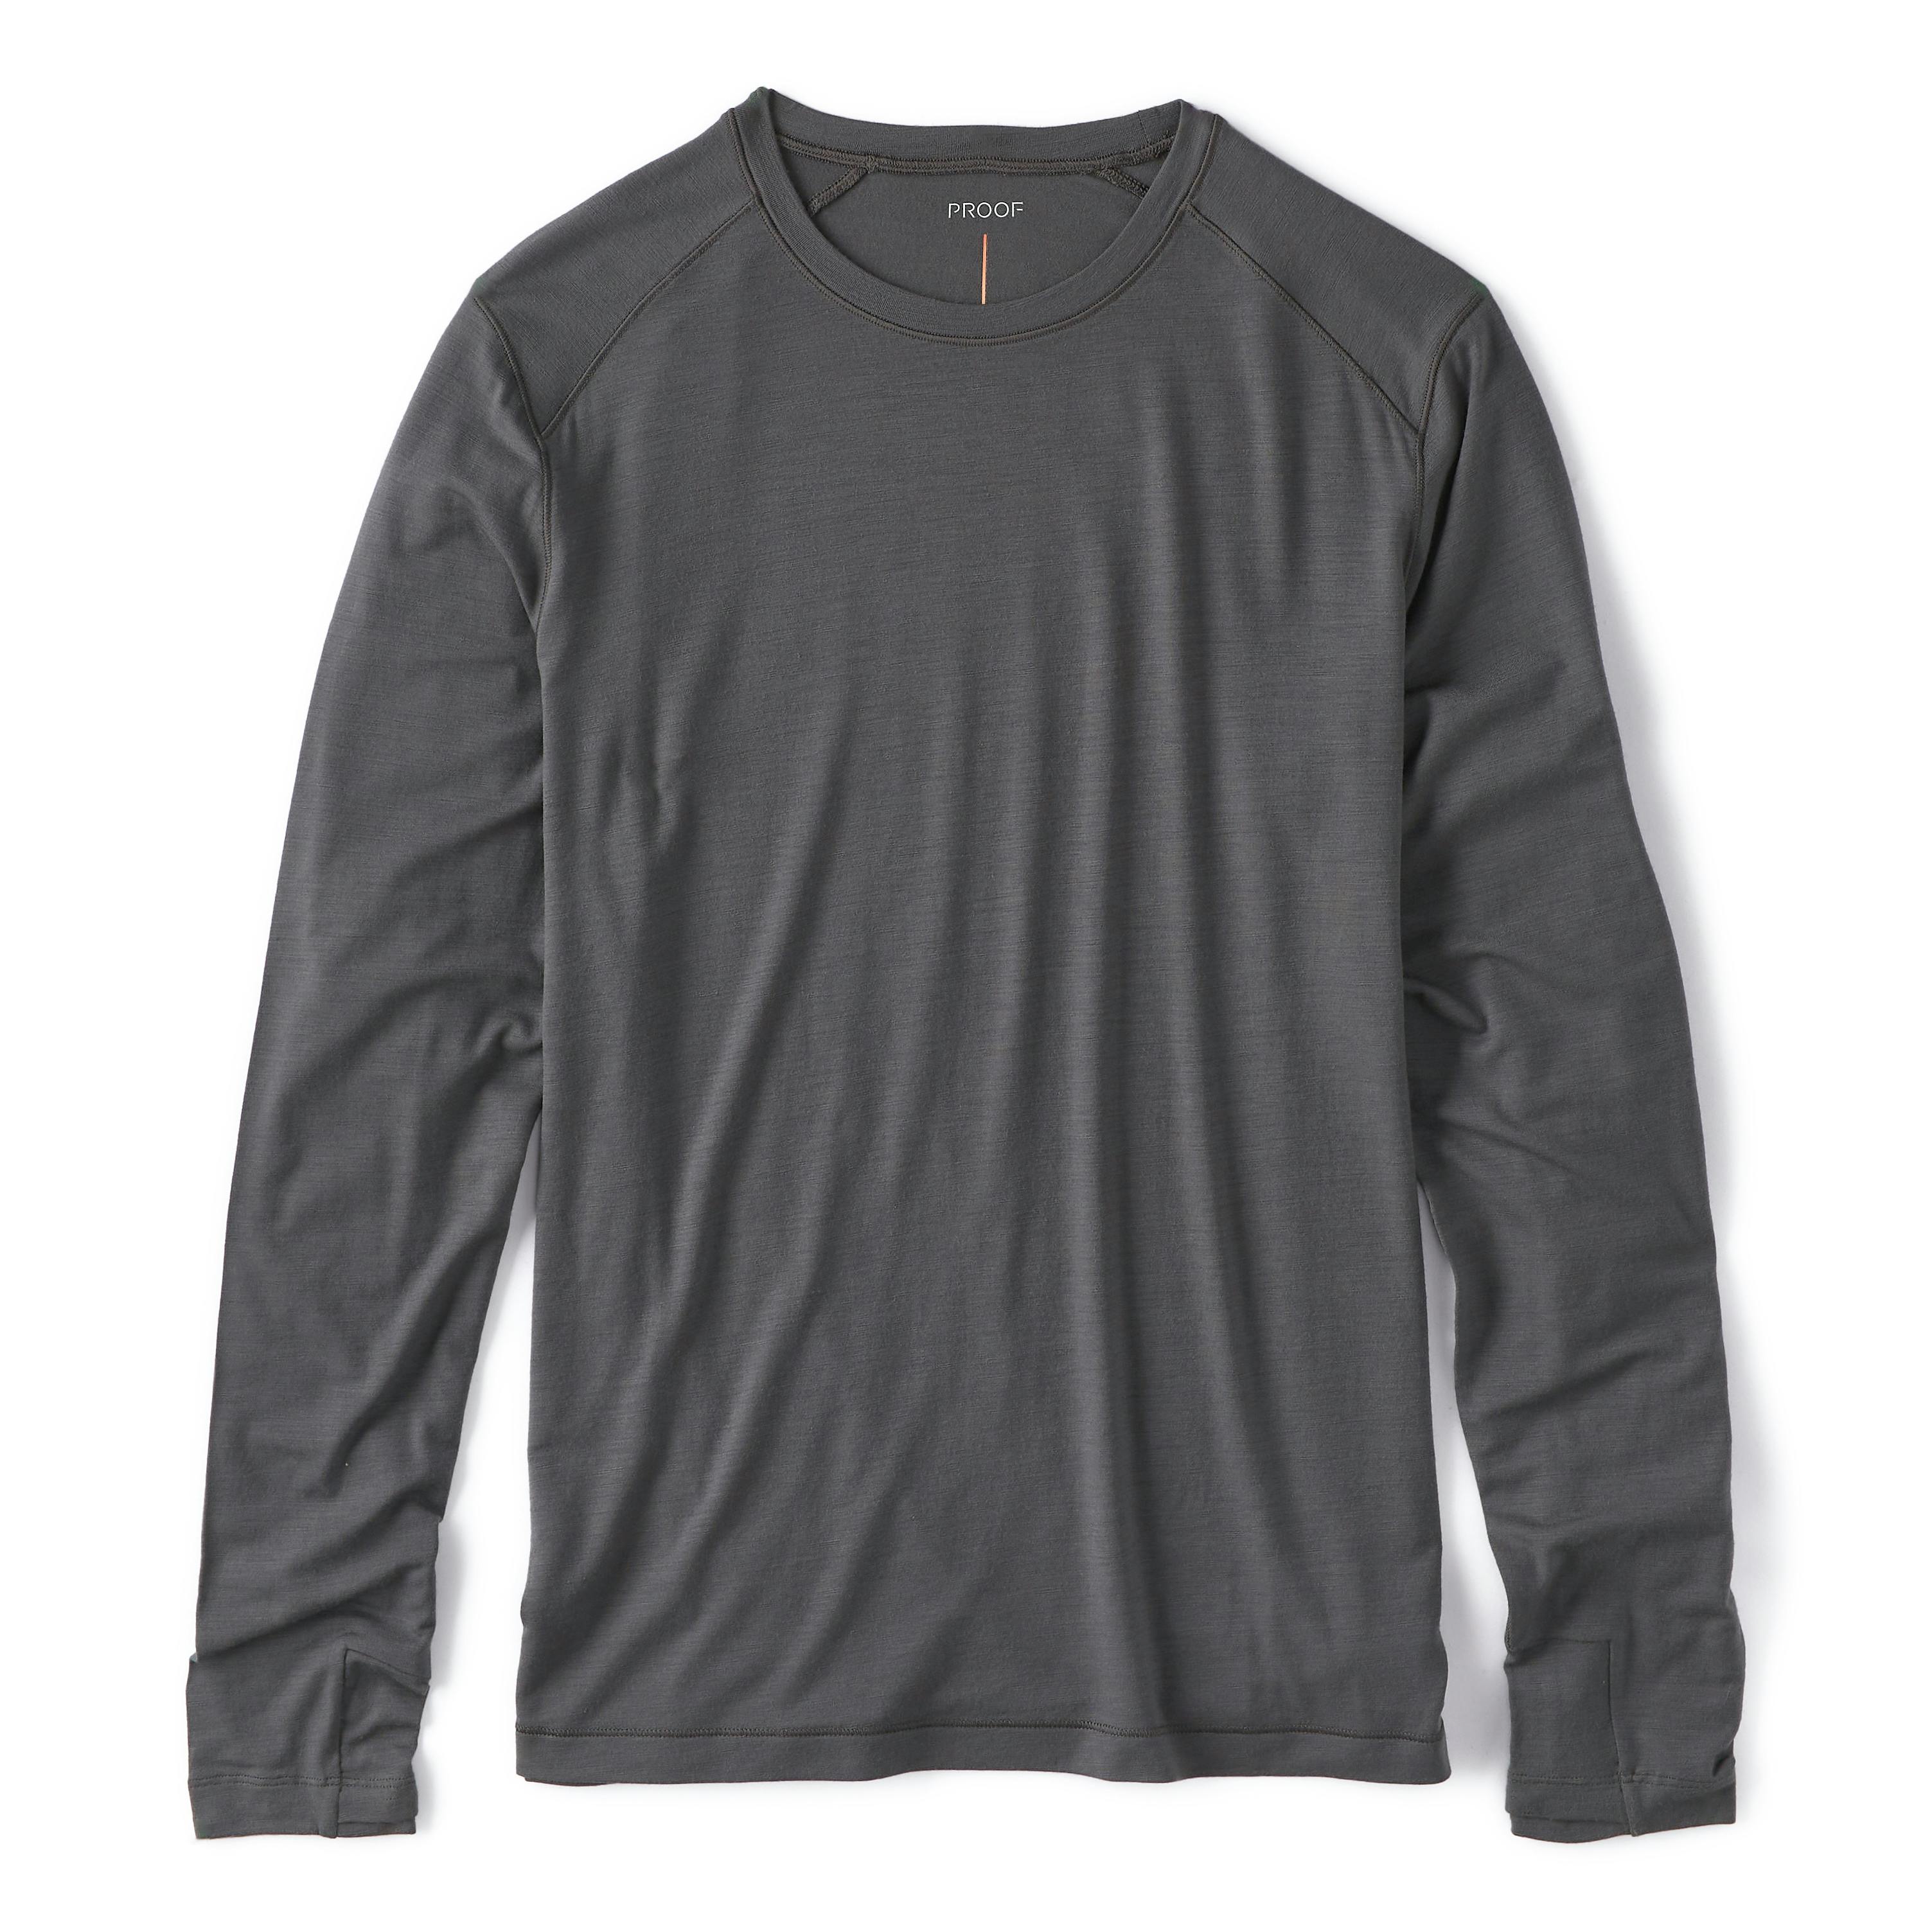 Proof 72-Hour Merino UPF Long Sleeve T-Shirt - Magnet, T-Shirts